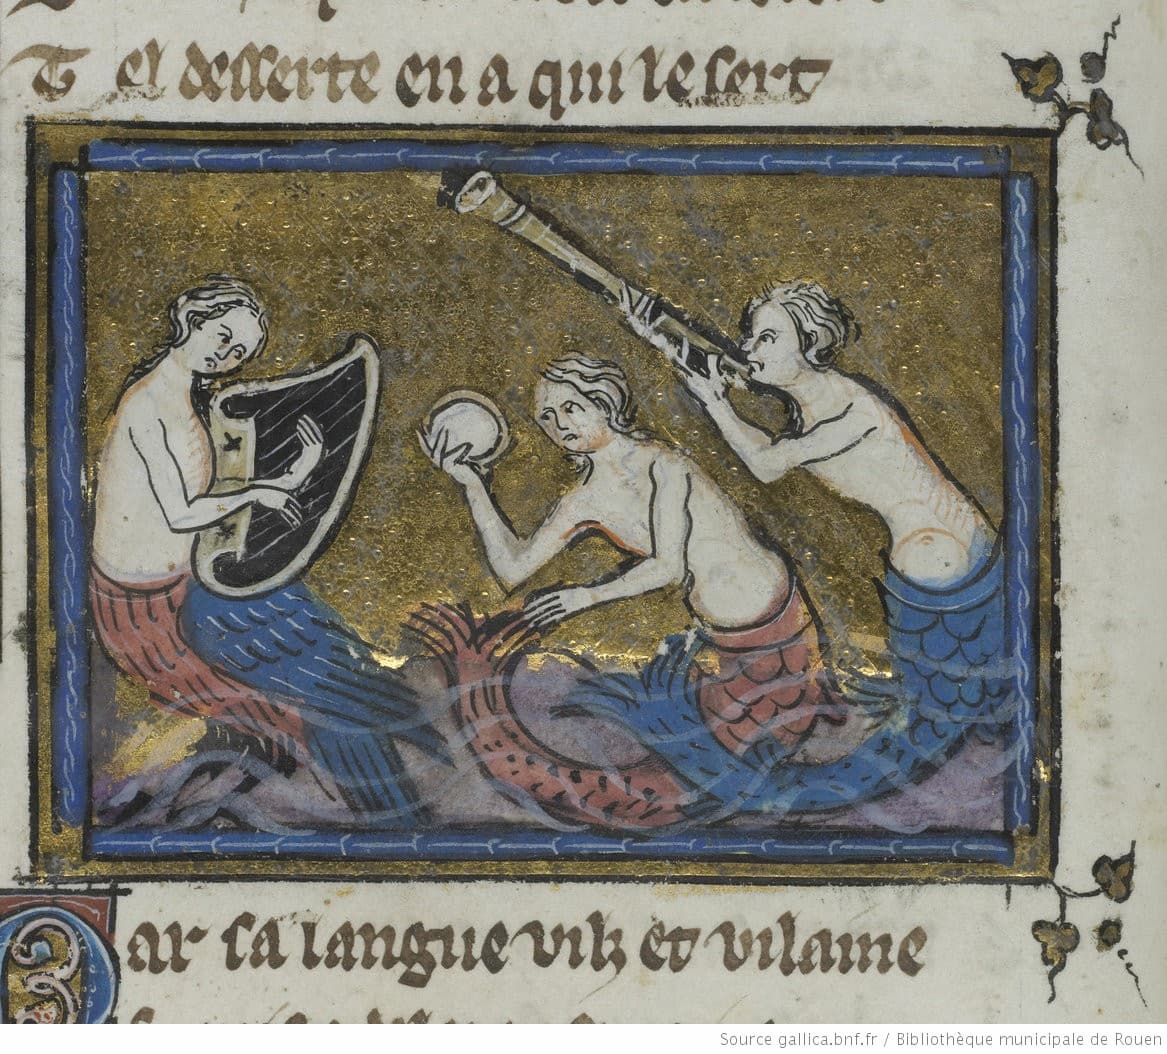 Ovid: Sirènes jouant de la musique, 1325 (Gallica: ark:/12148/btv1b100502162)